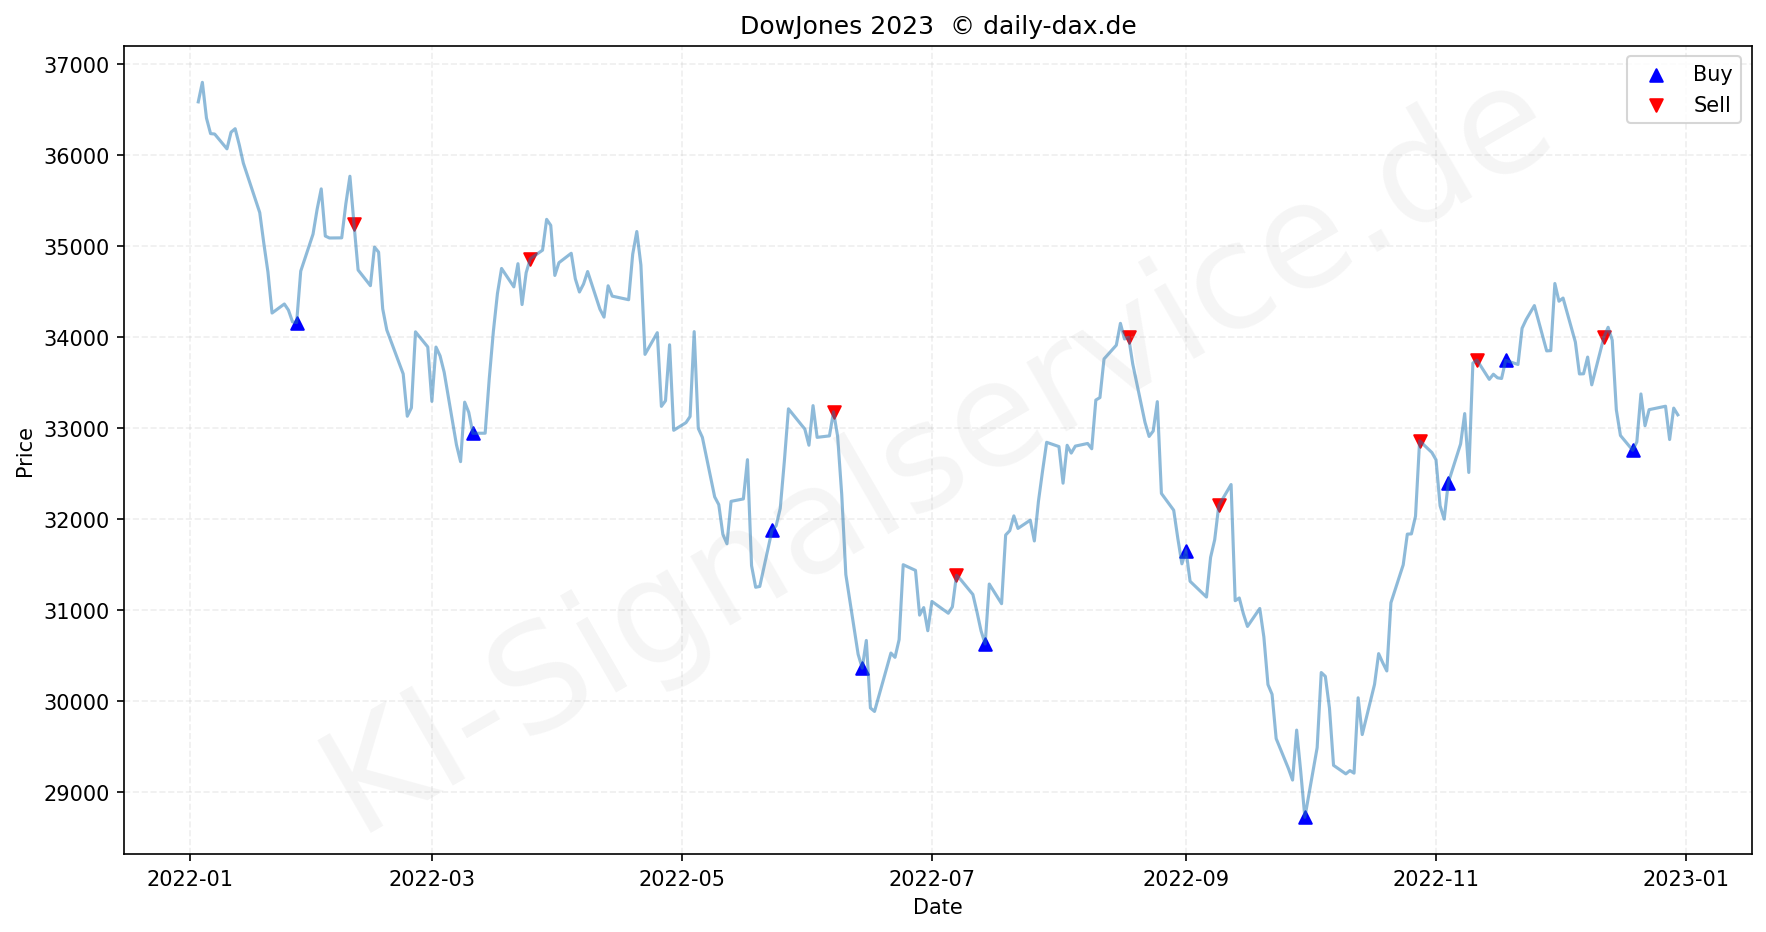 DowJones KI Signal Service - Tradingsignale im Jahr 2022